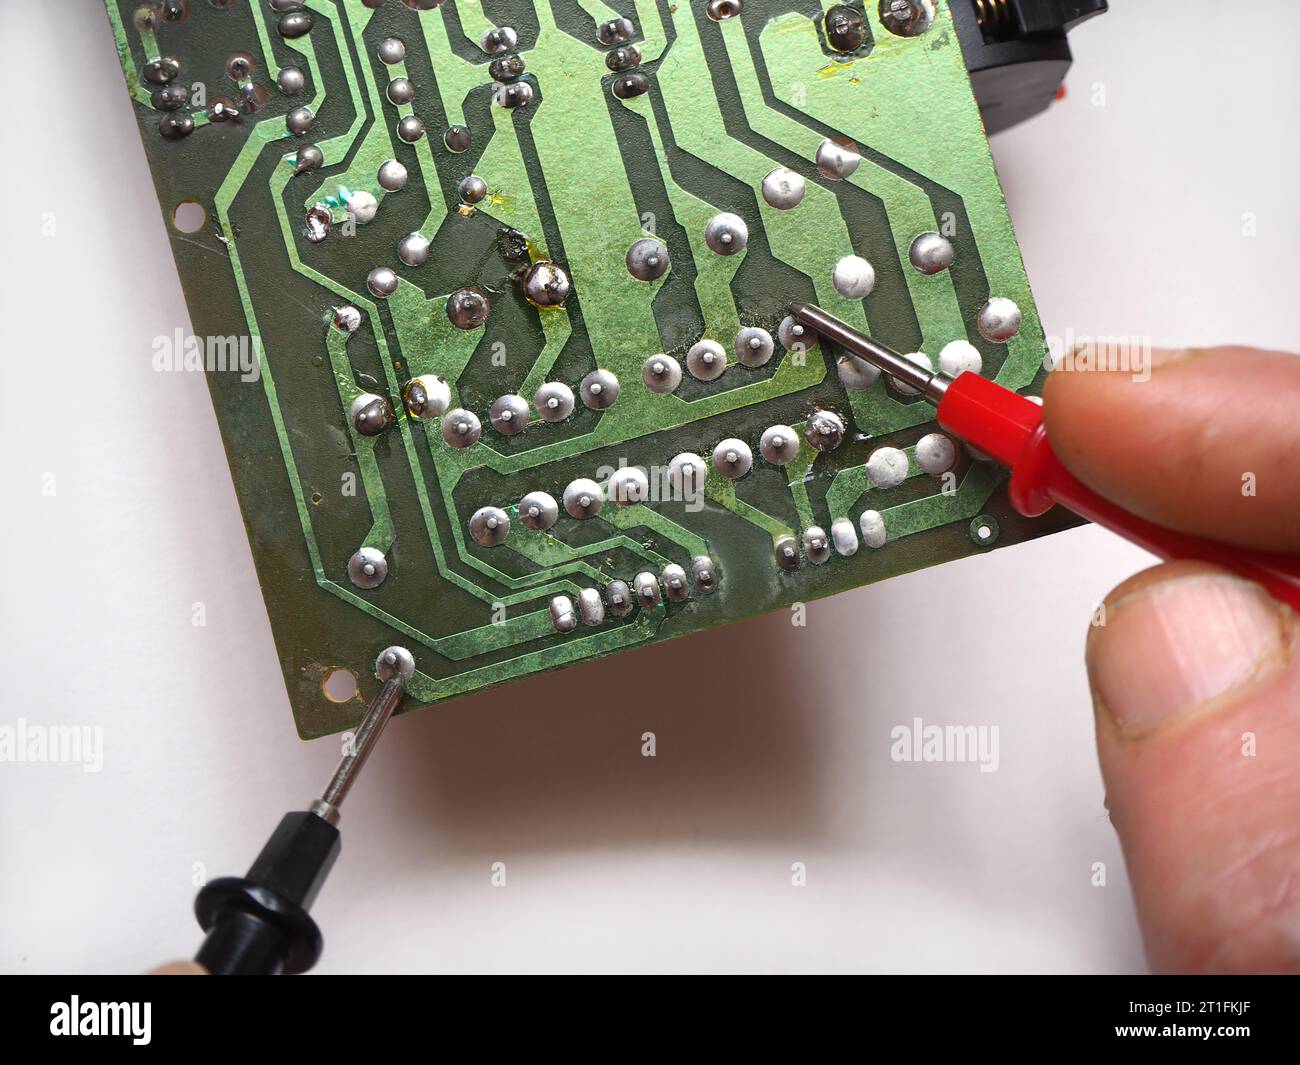 Repairman making measurements on electronic circuit board. Stock Photo